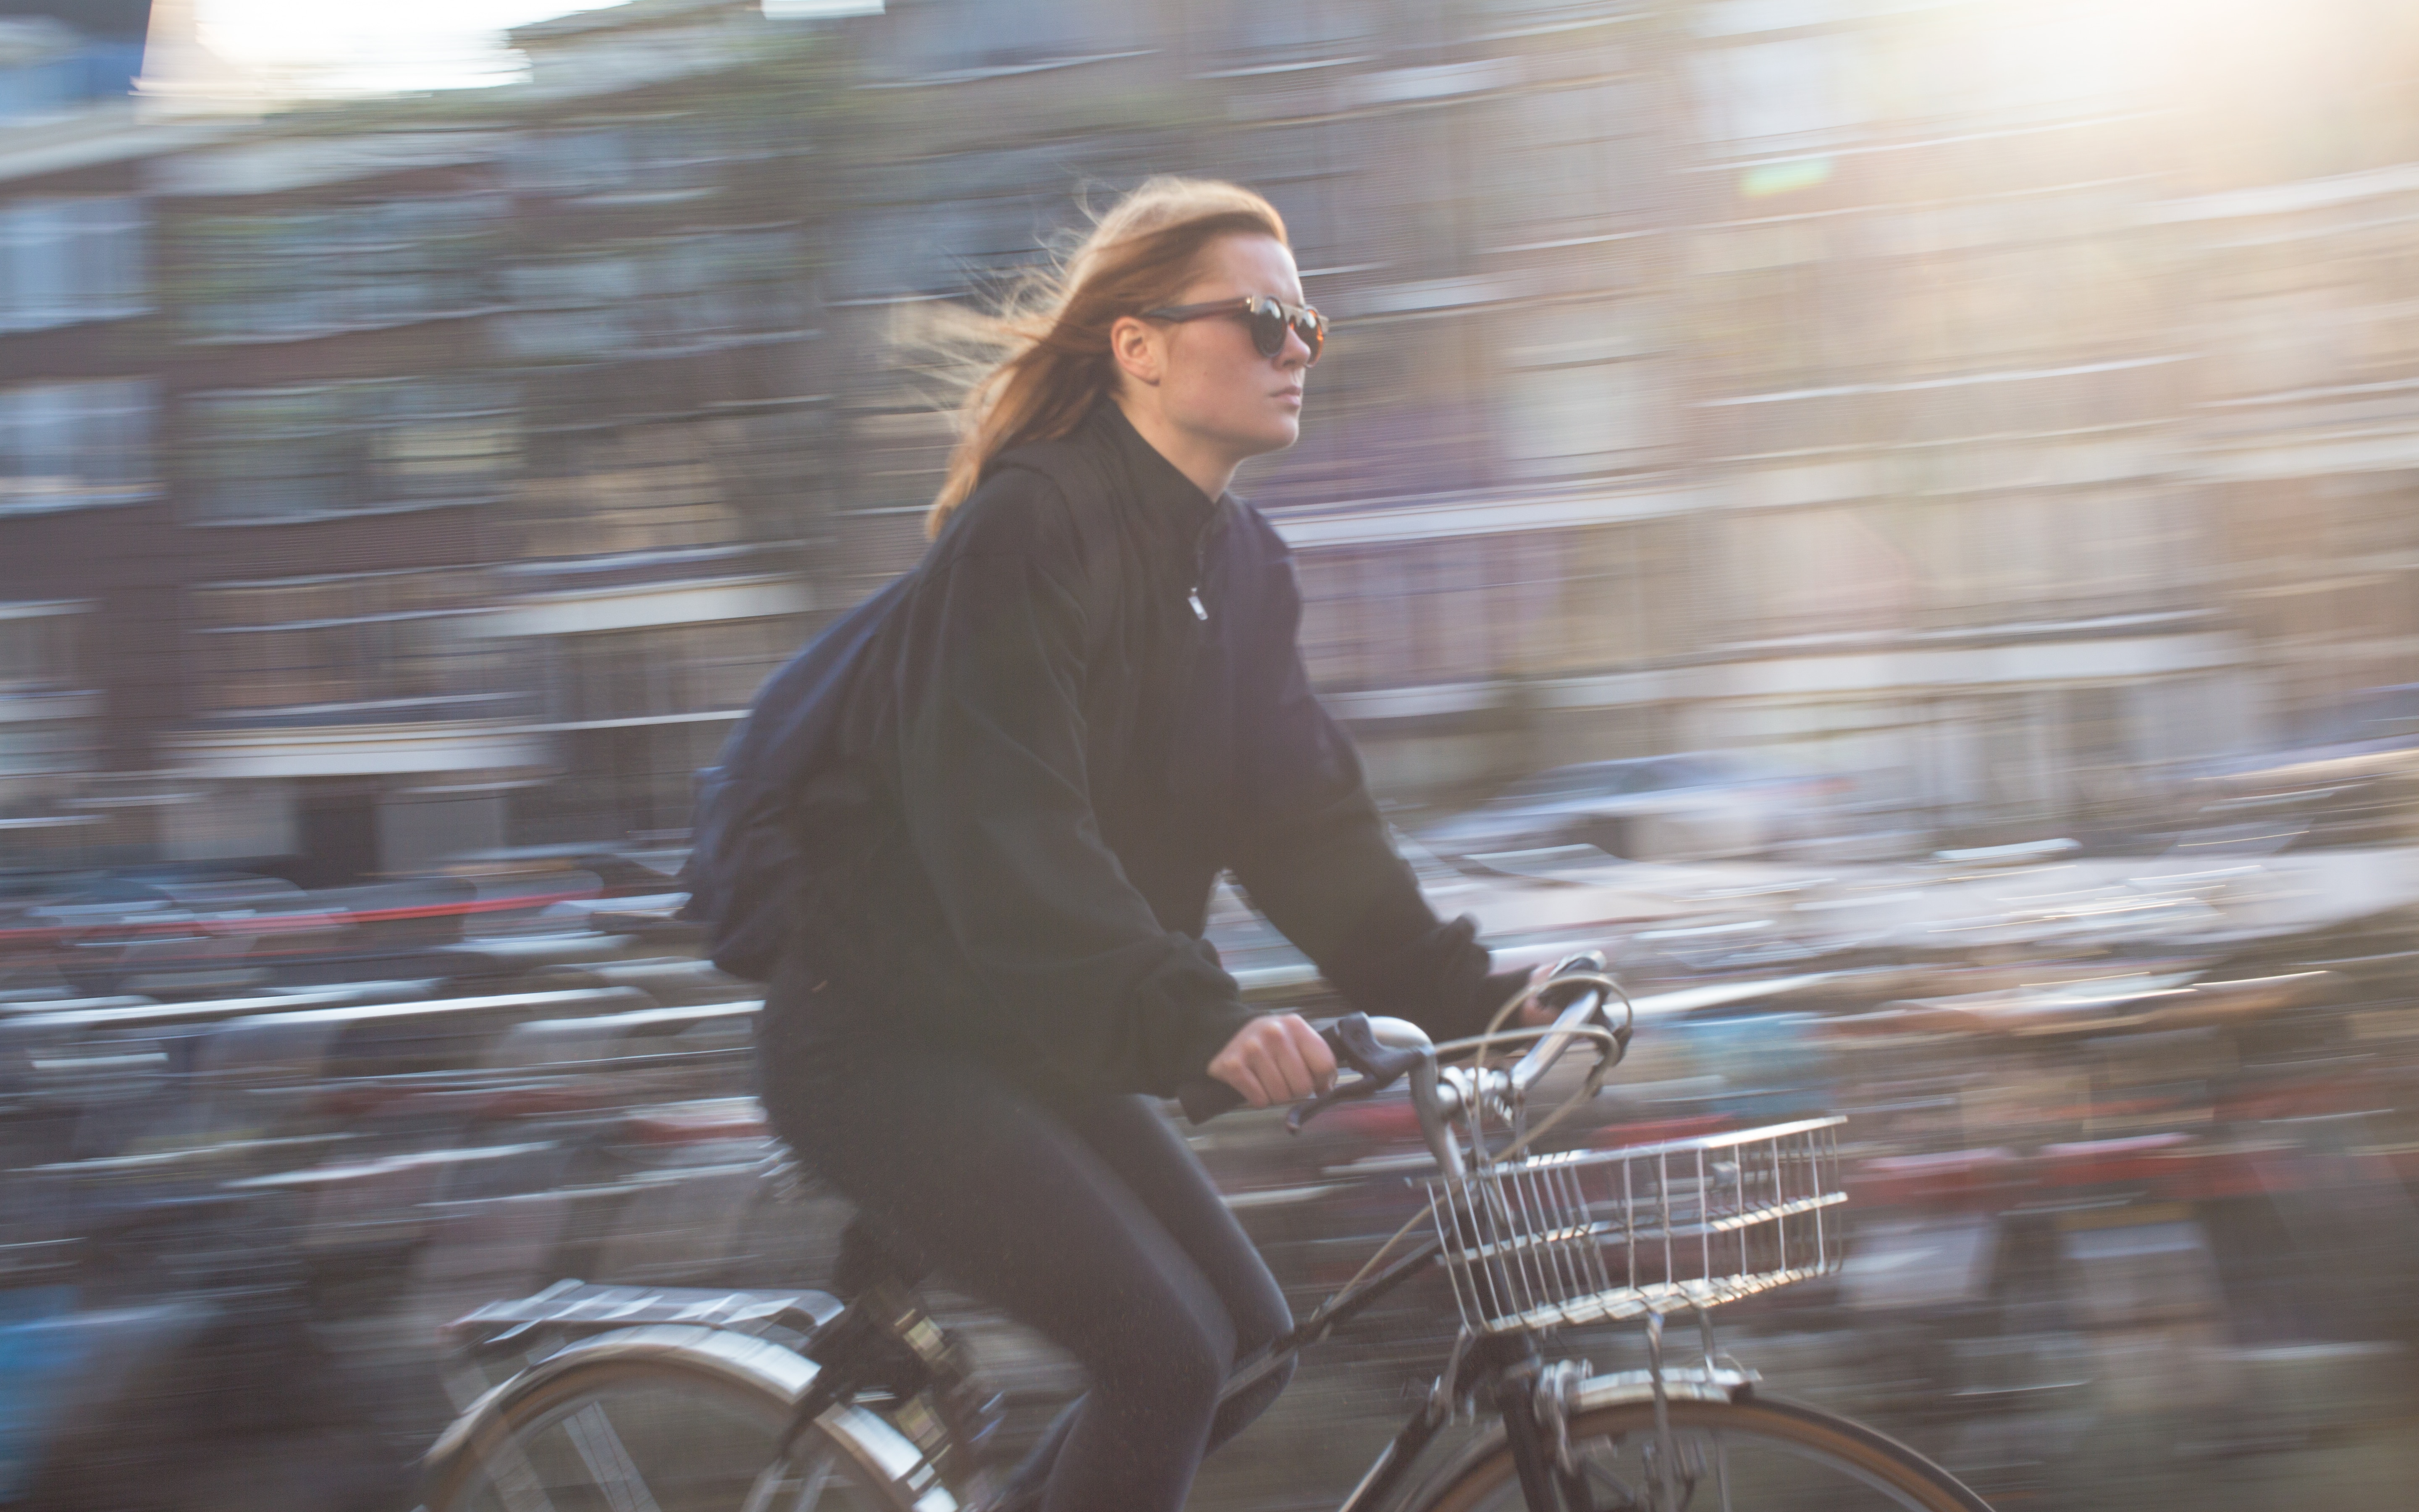 woman in black shirt riding bicycle